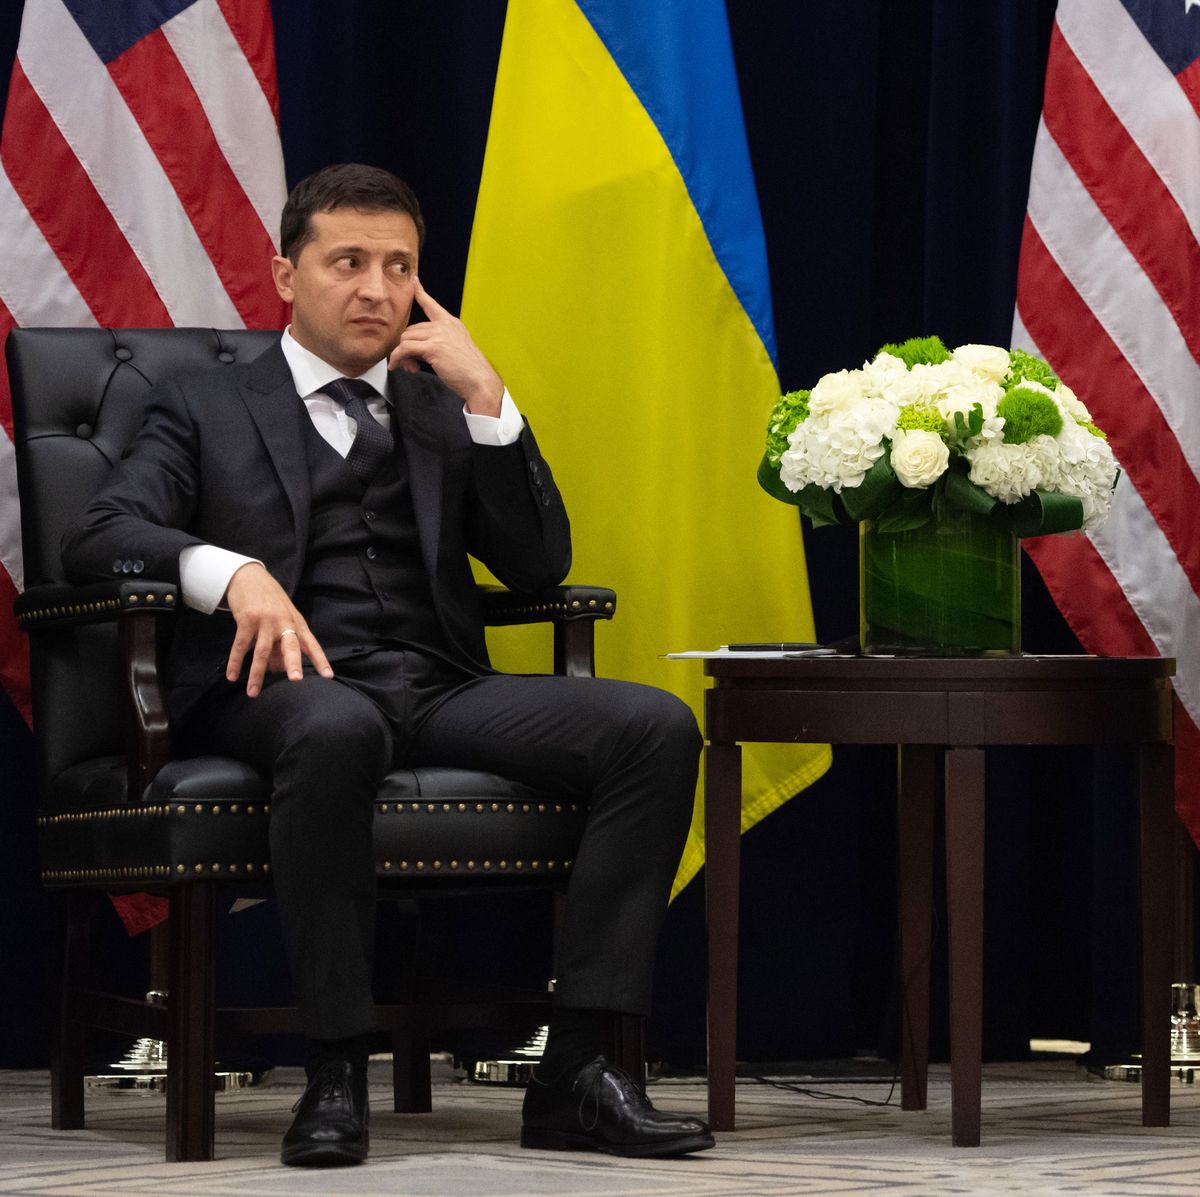 TOPSHOT-US-POLITICS-GENERAL ASSEMBLY-DIPLOMACY-Ukraine-climate